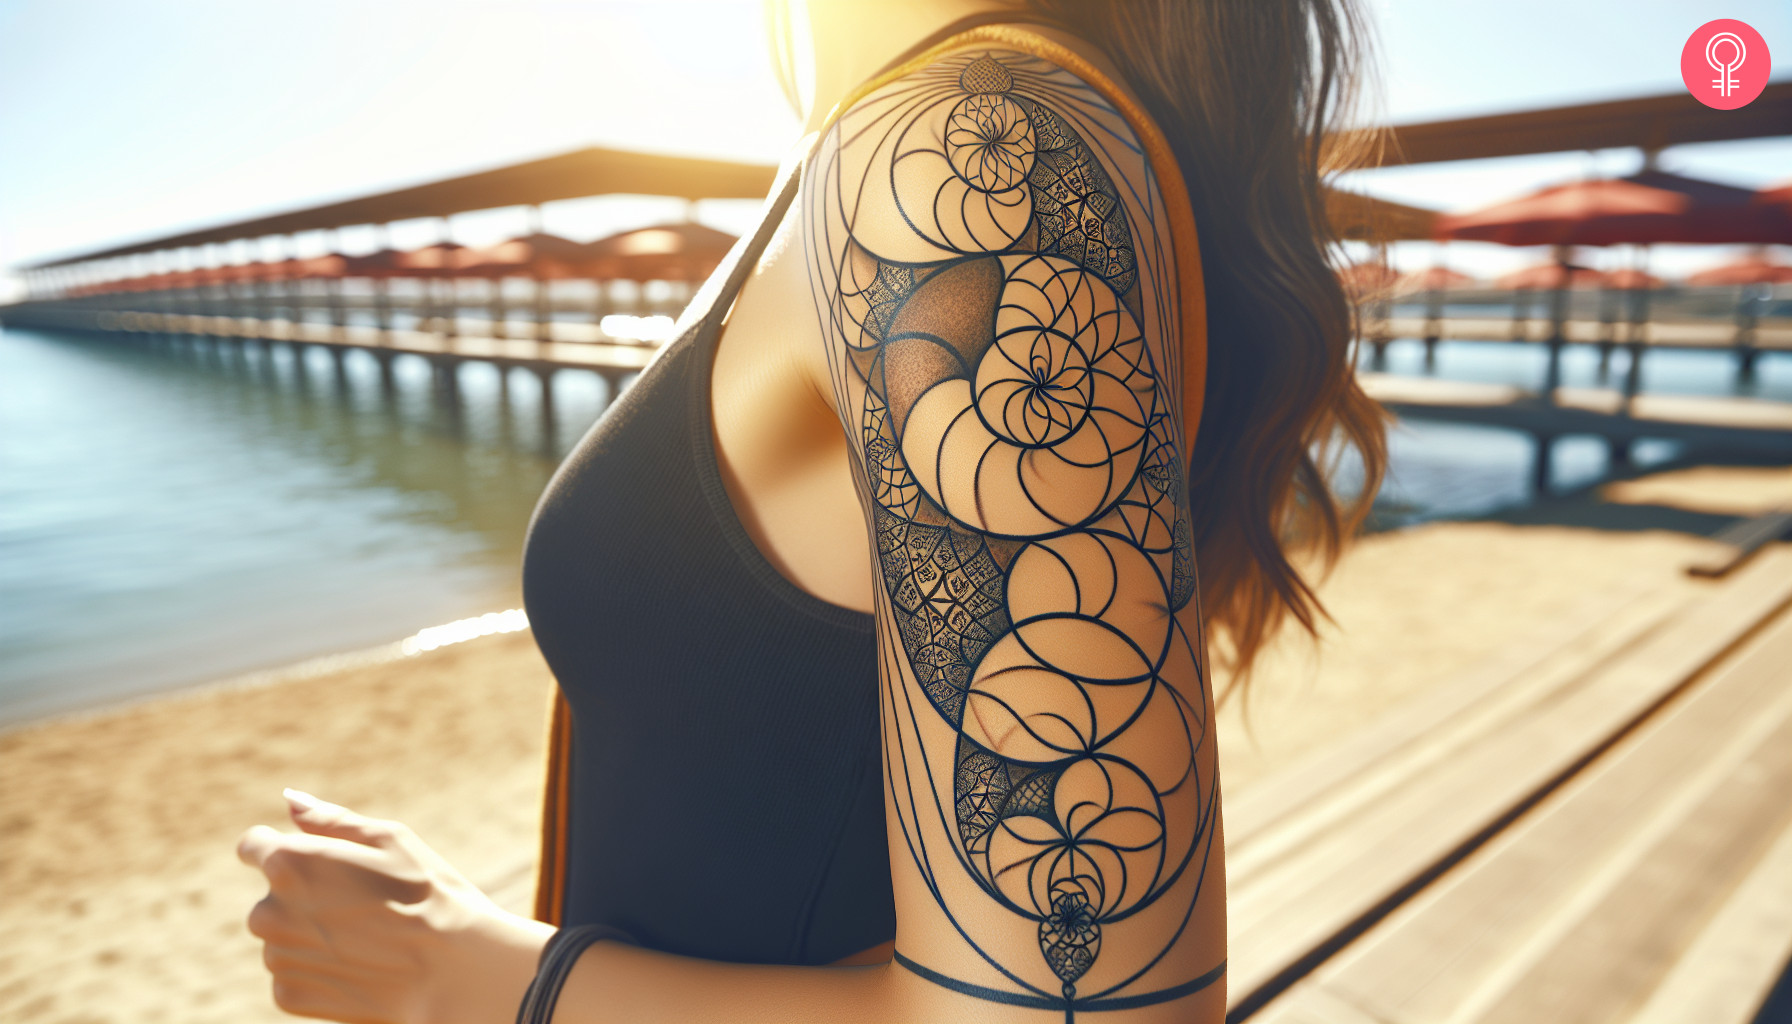 Fractal tattoo on a woman’s arm